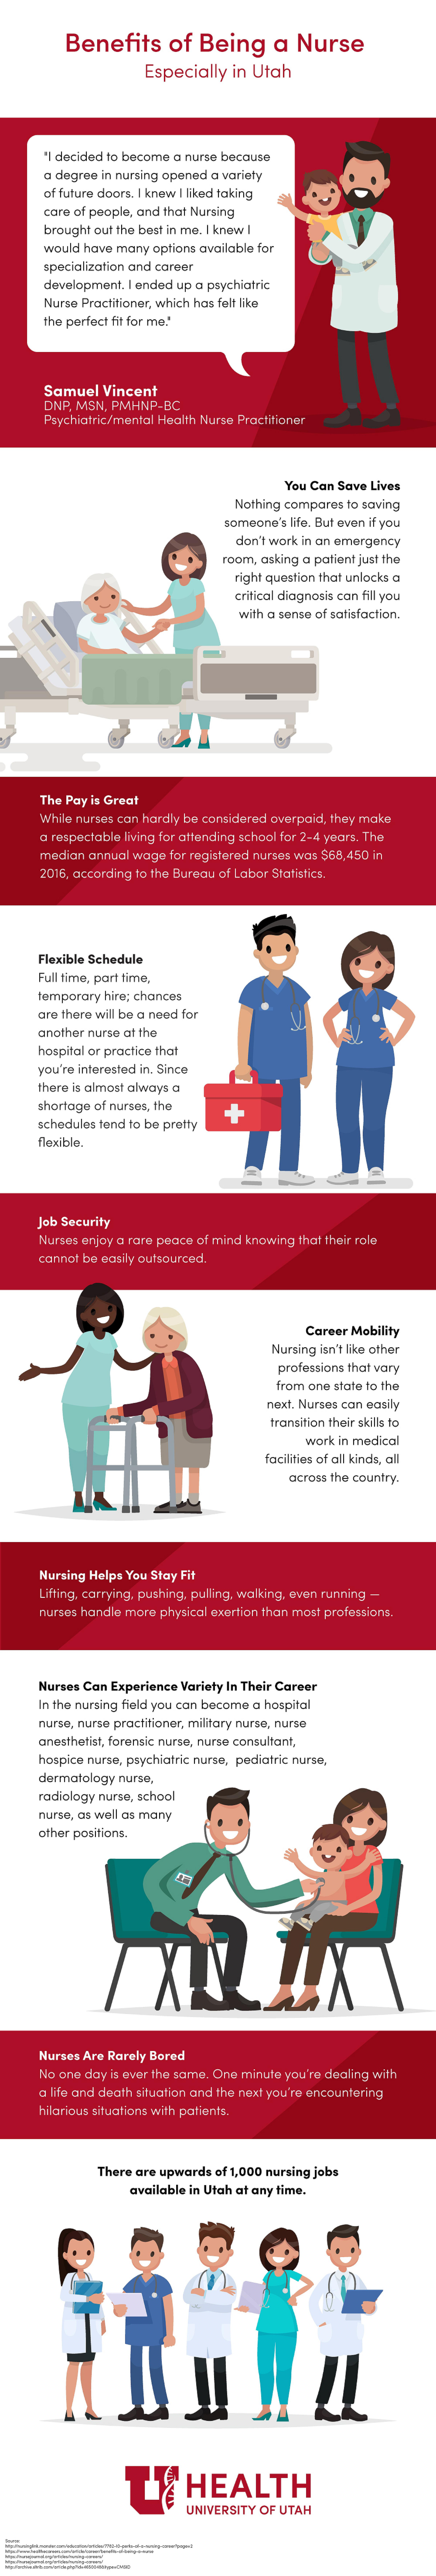 Nursing benefits infographic